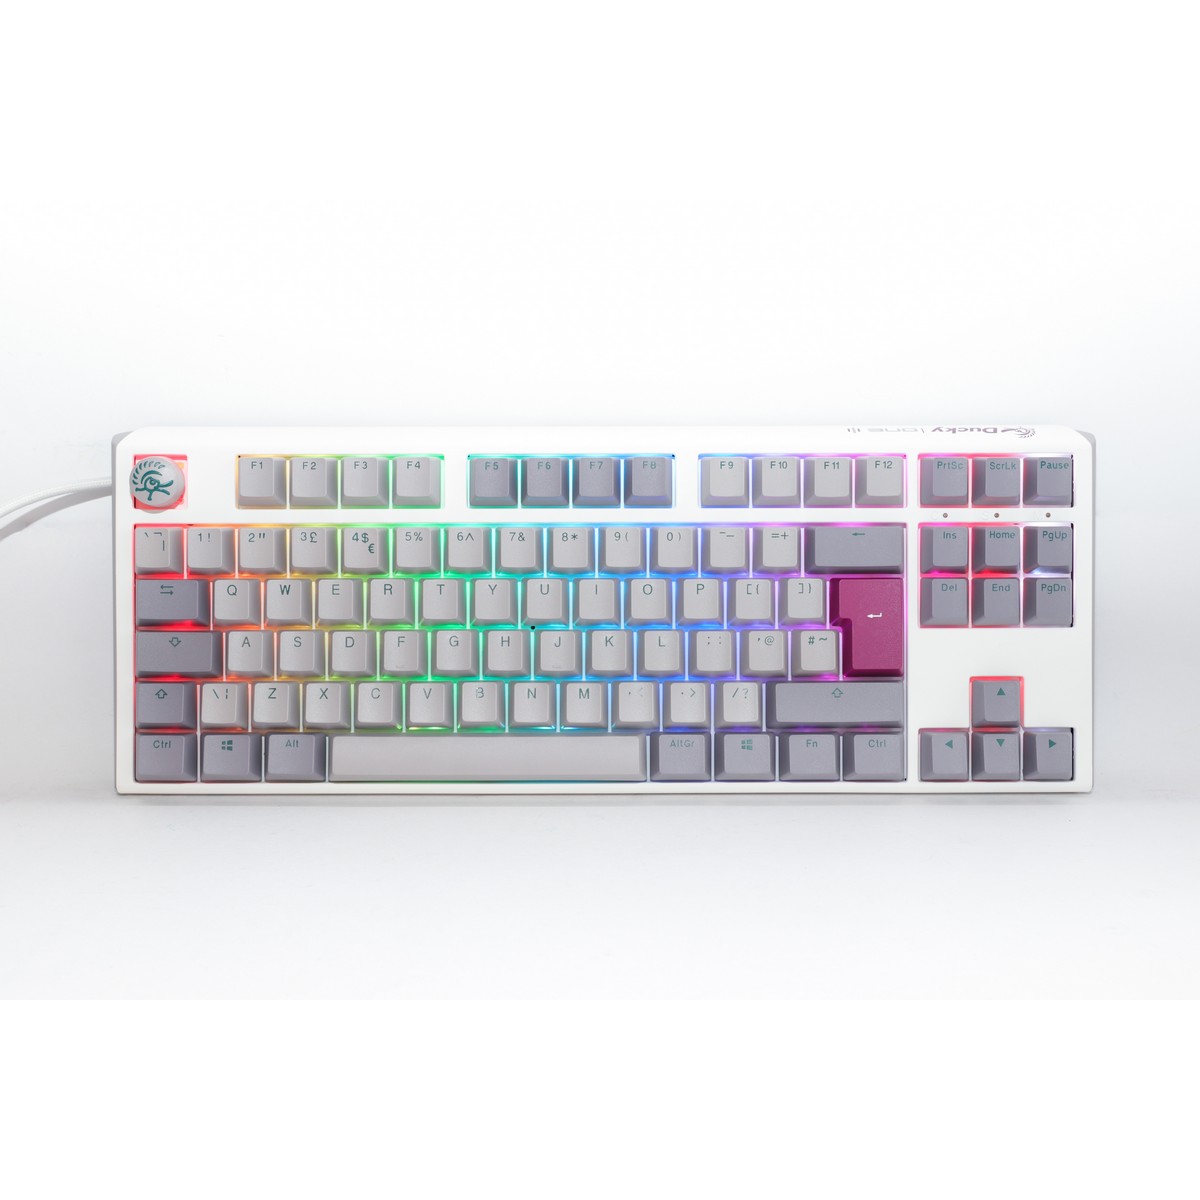 Ducky One 3 Mist TKL 80% USB RGB Mechanical Gaming Keyboard Cherry MX Brown Switch - UK Layout